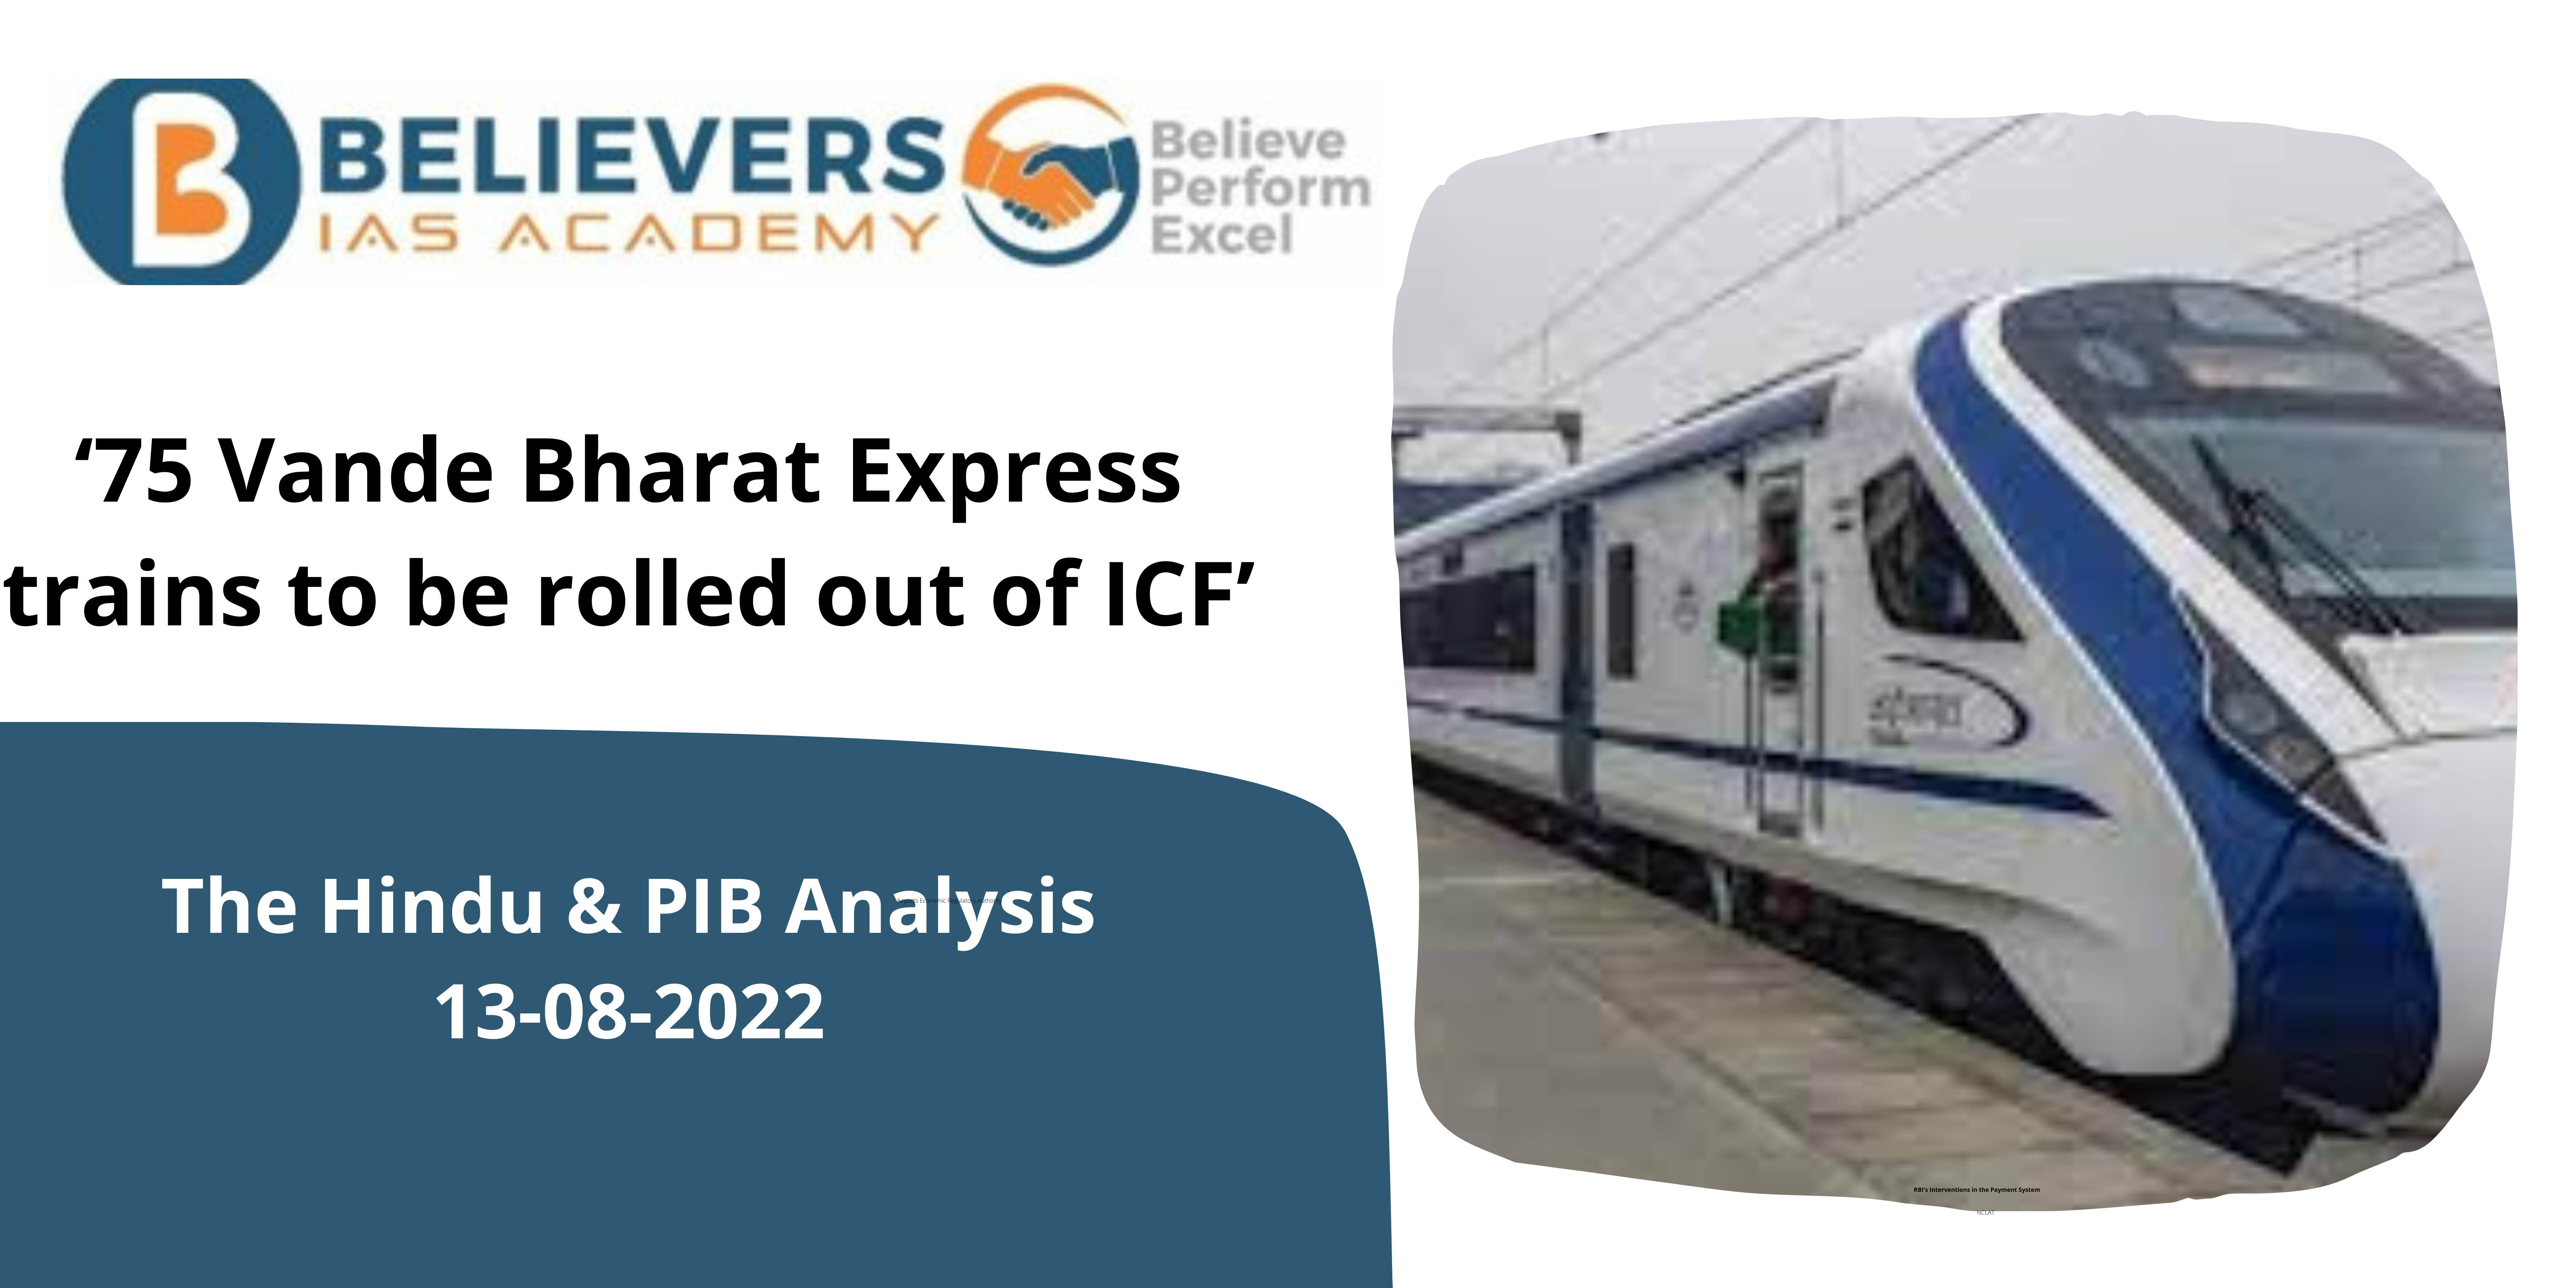 ICF's Plan: 75 Vande Bharat Express Trains